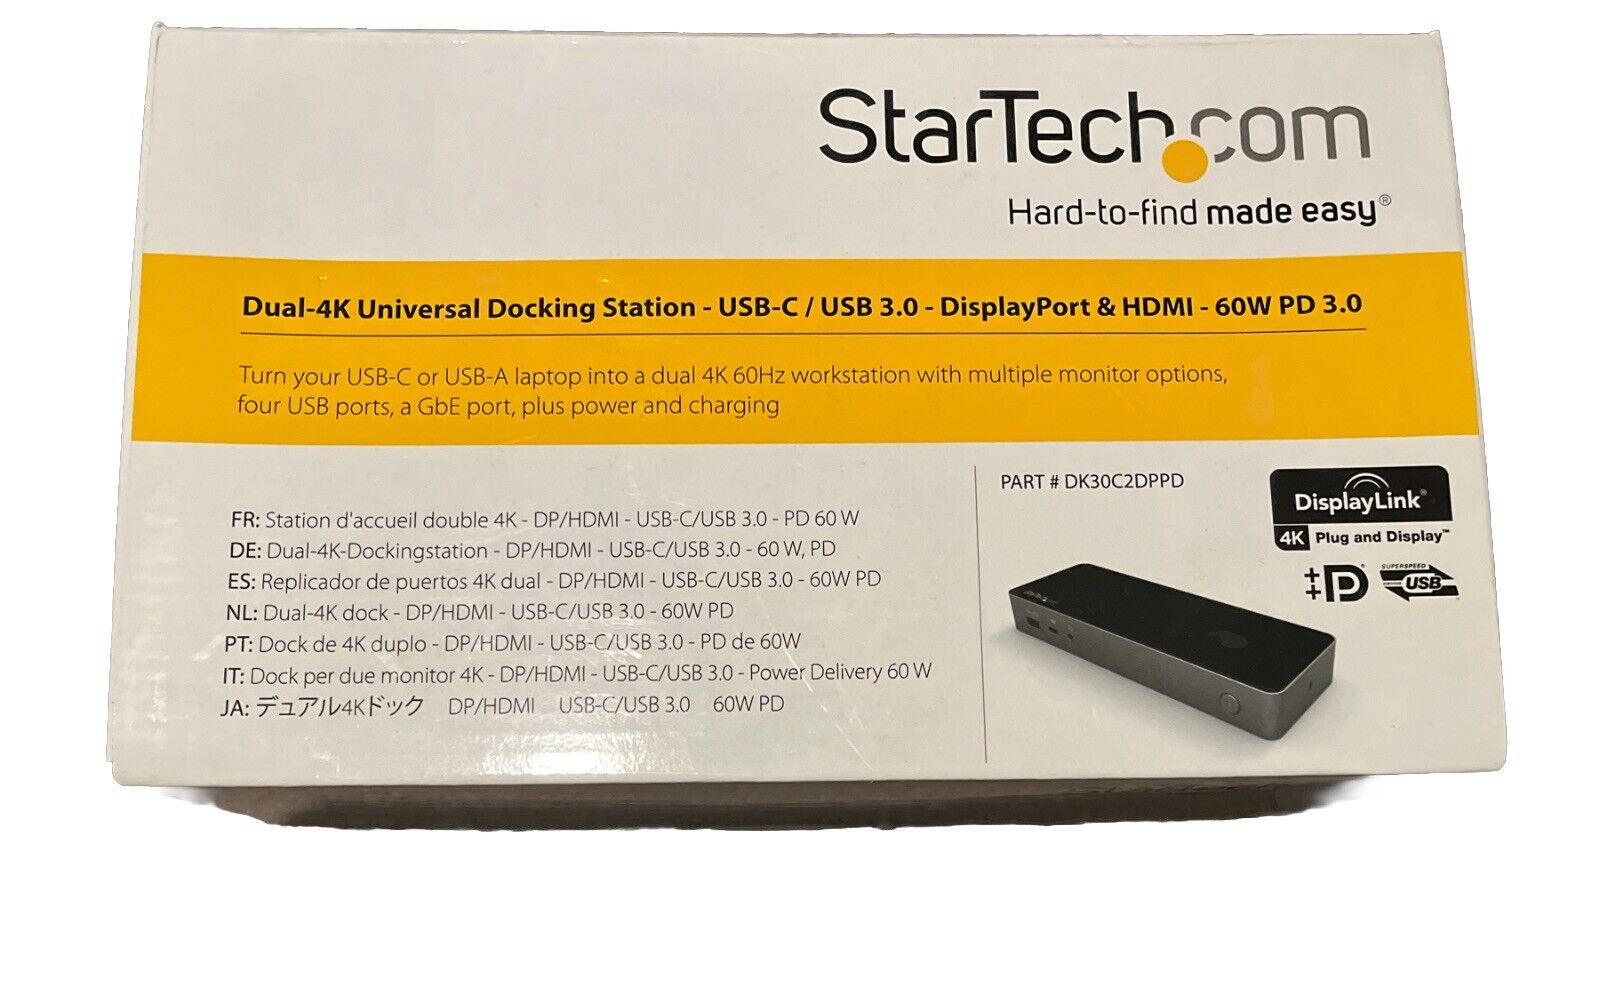 StarTech DK30C2DPPD Dual-4K Universal Docking Station USB-C/USB 3.0 - TESTED